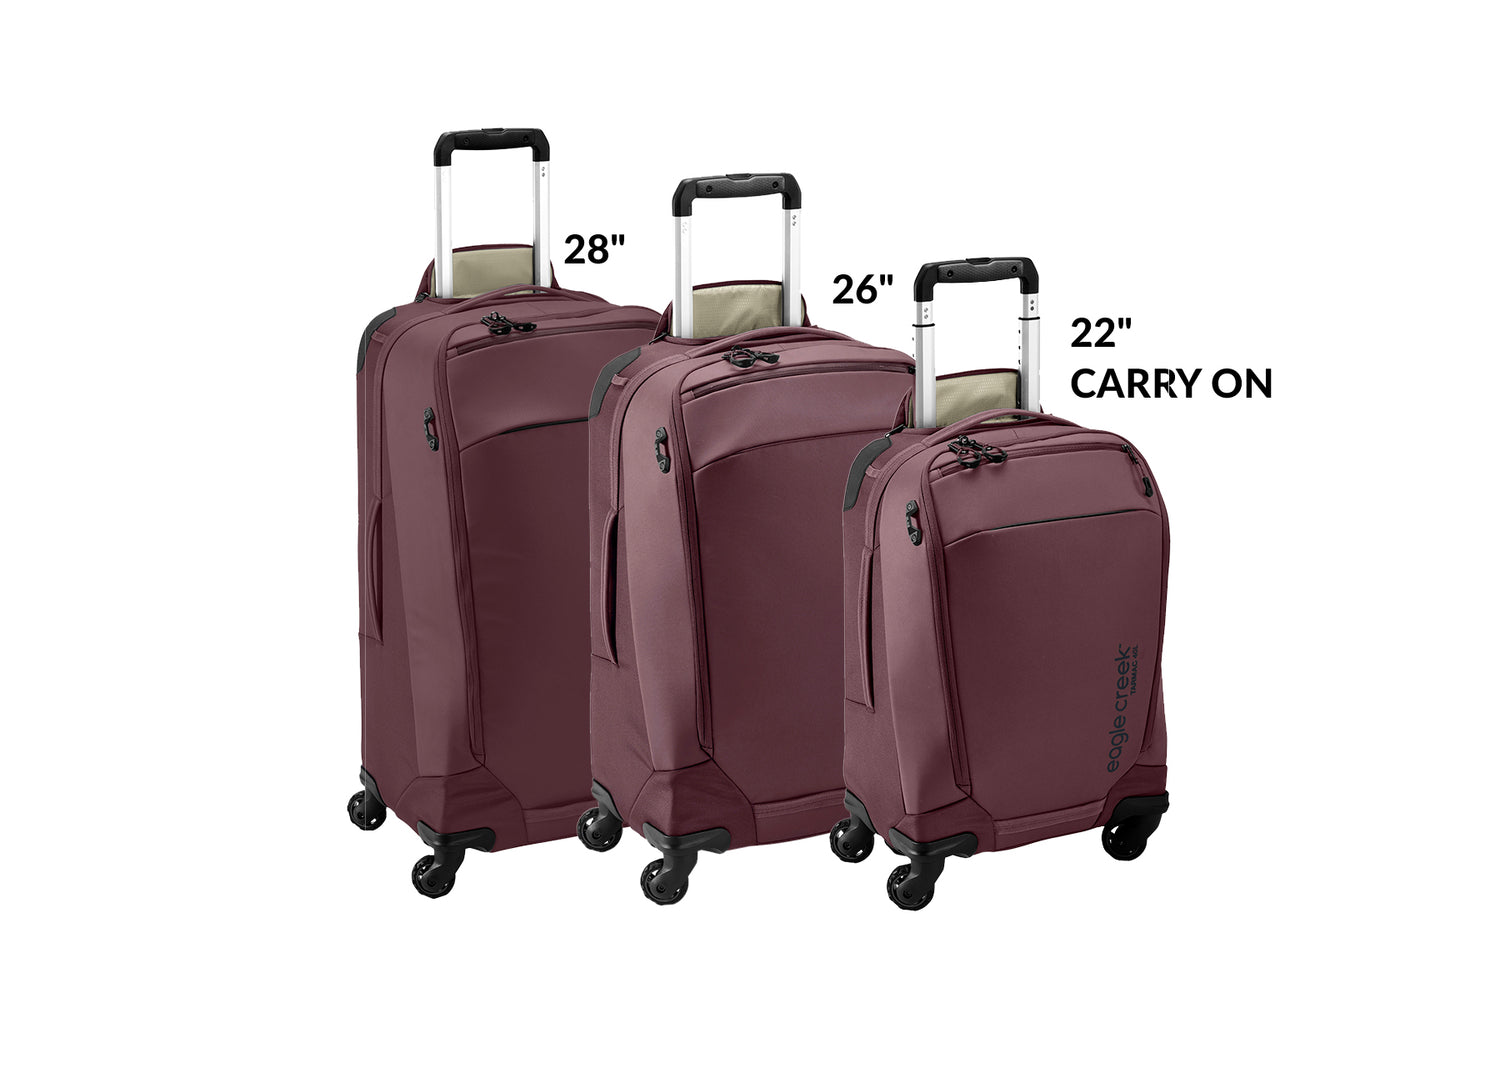 Tarmac XE 4-Wheel 22" Carry-On Luggage - ARCTIC SEAGREEN